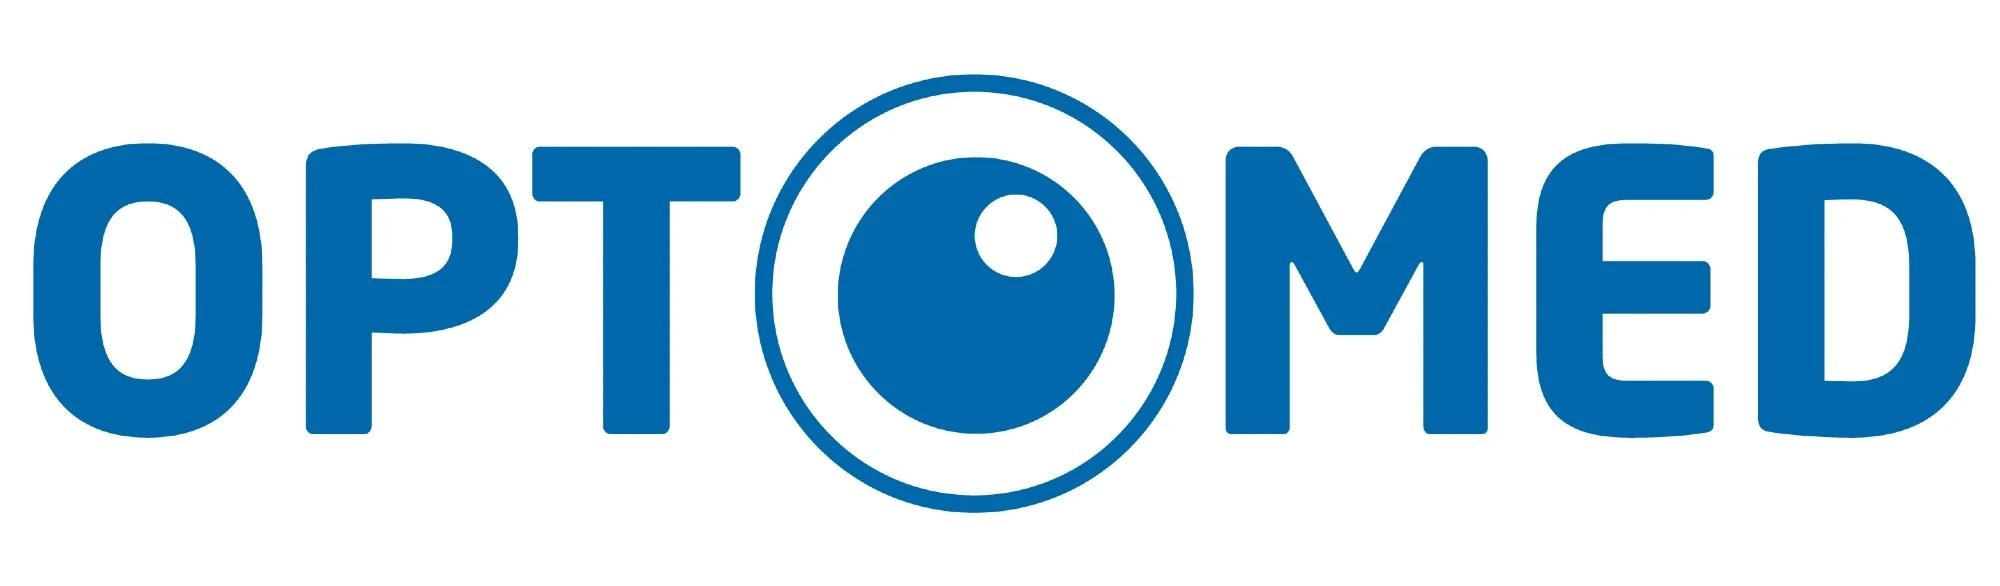 Optomed Oy logo.